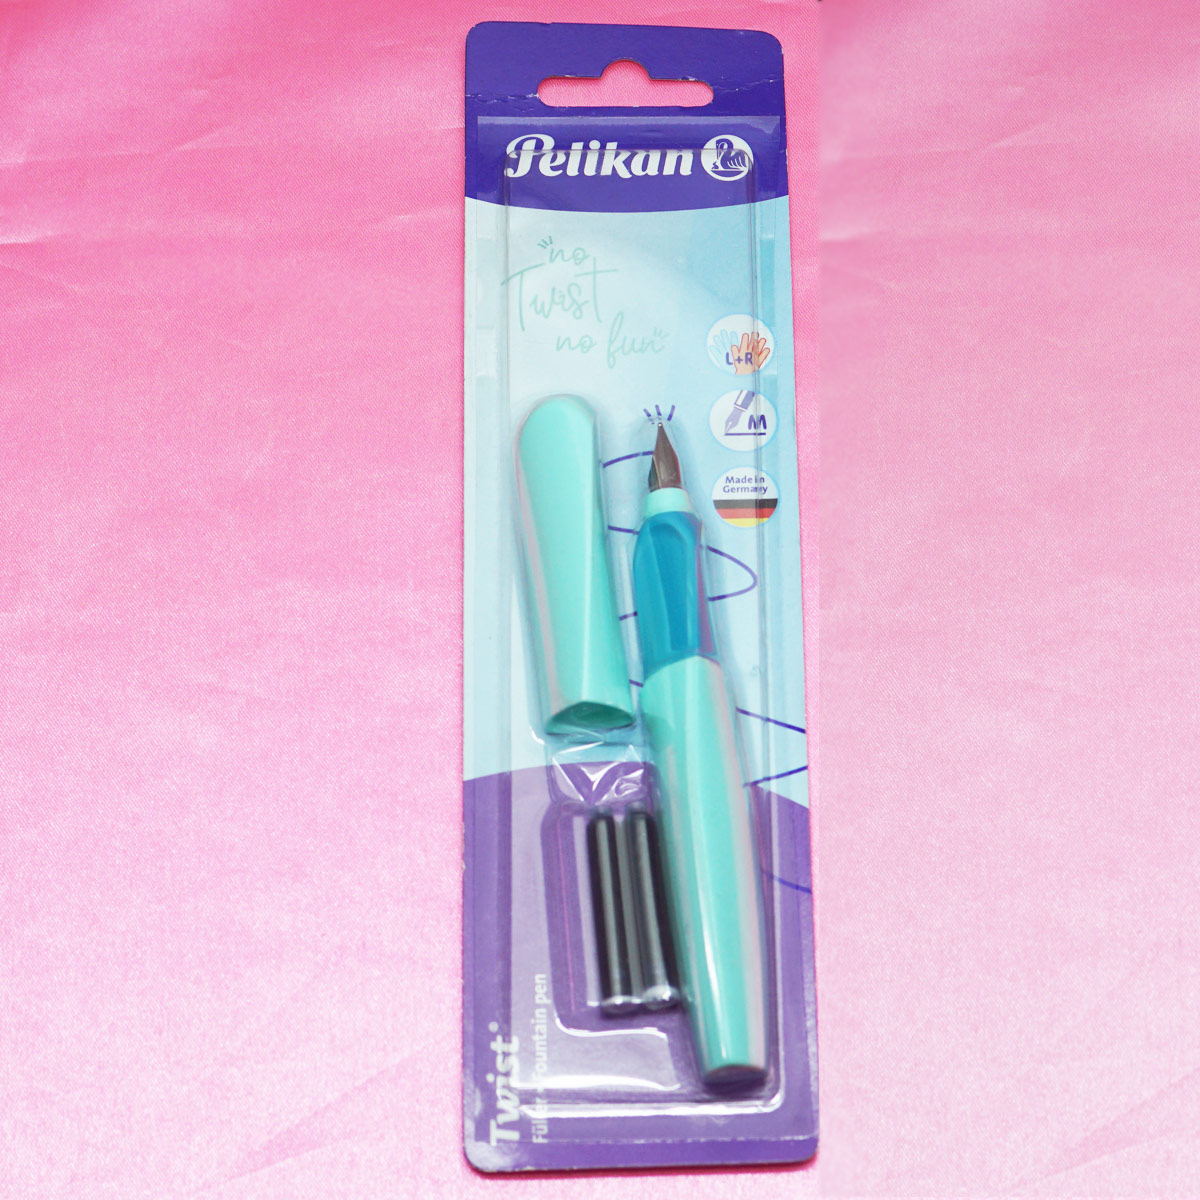 Pelikan Twist Light Green Color Triangular Body With Blue Color Grip Medium Nib Cartridge Type Fountain Pen SKU 22049